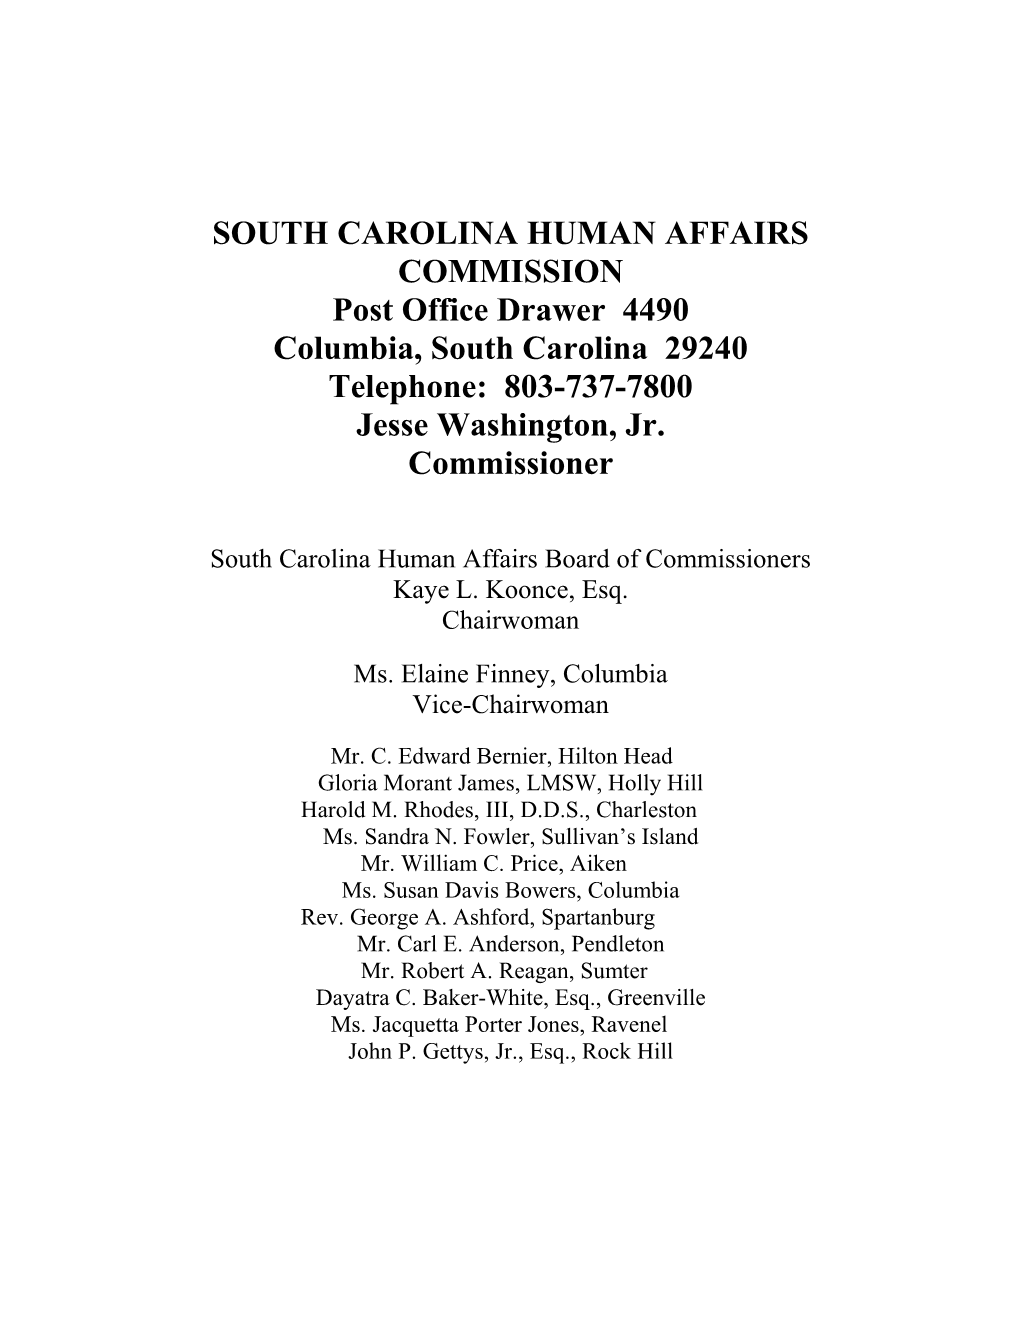 South Carolina Human Affairs Commission